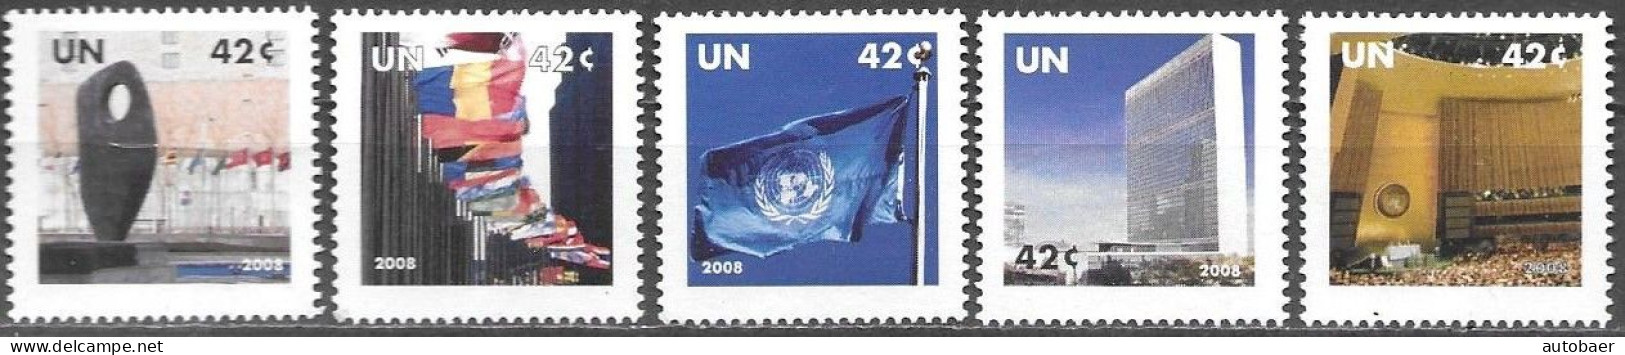 United Nations UNO UN Vereinte Nationen New York 2008 Greetings Mi.No.1091-95 MNH ** Neuf - Neufs